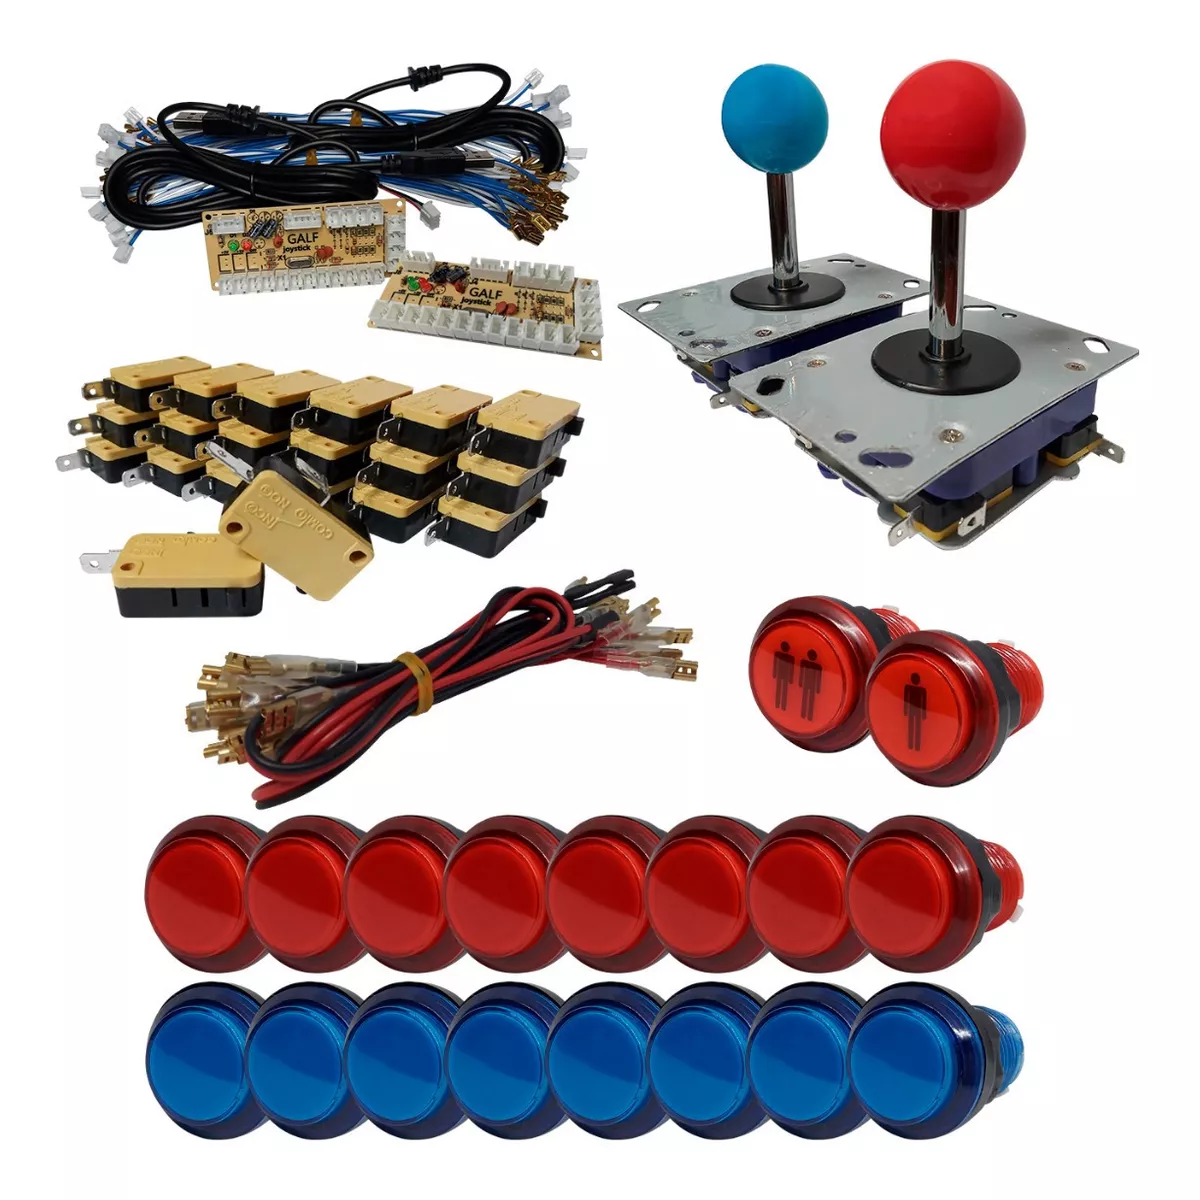 Kit Arcade 2 Player Botones Transparentes Led Rojo Azul